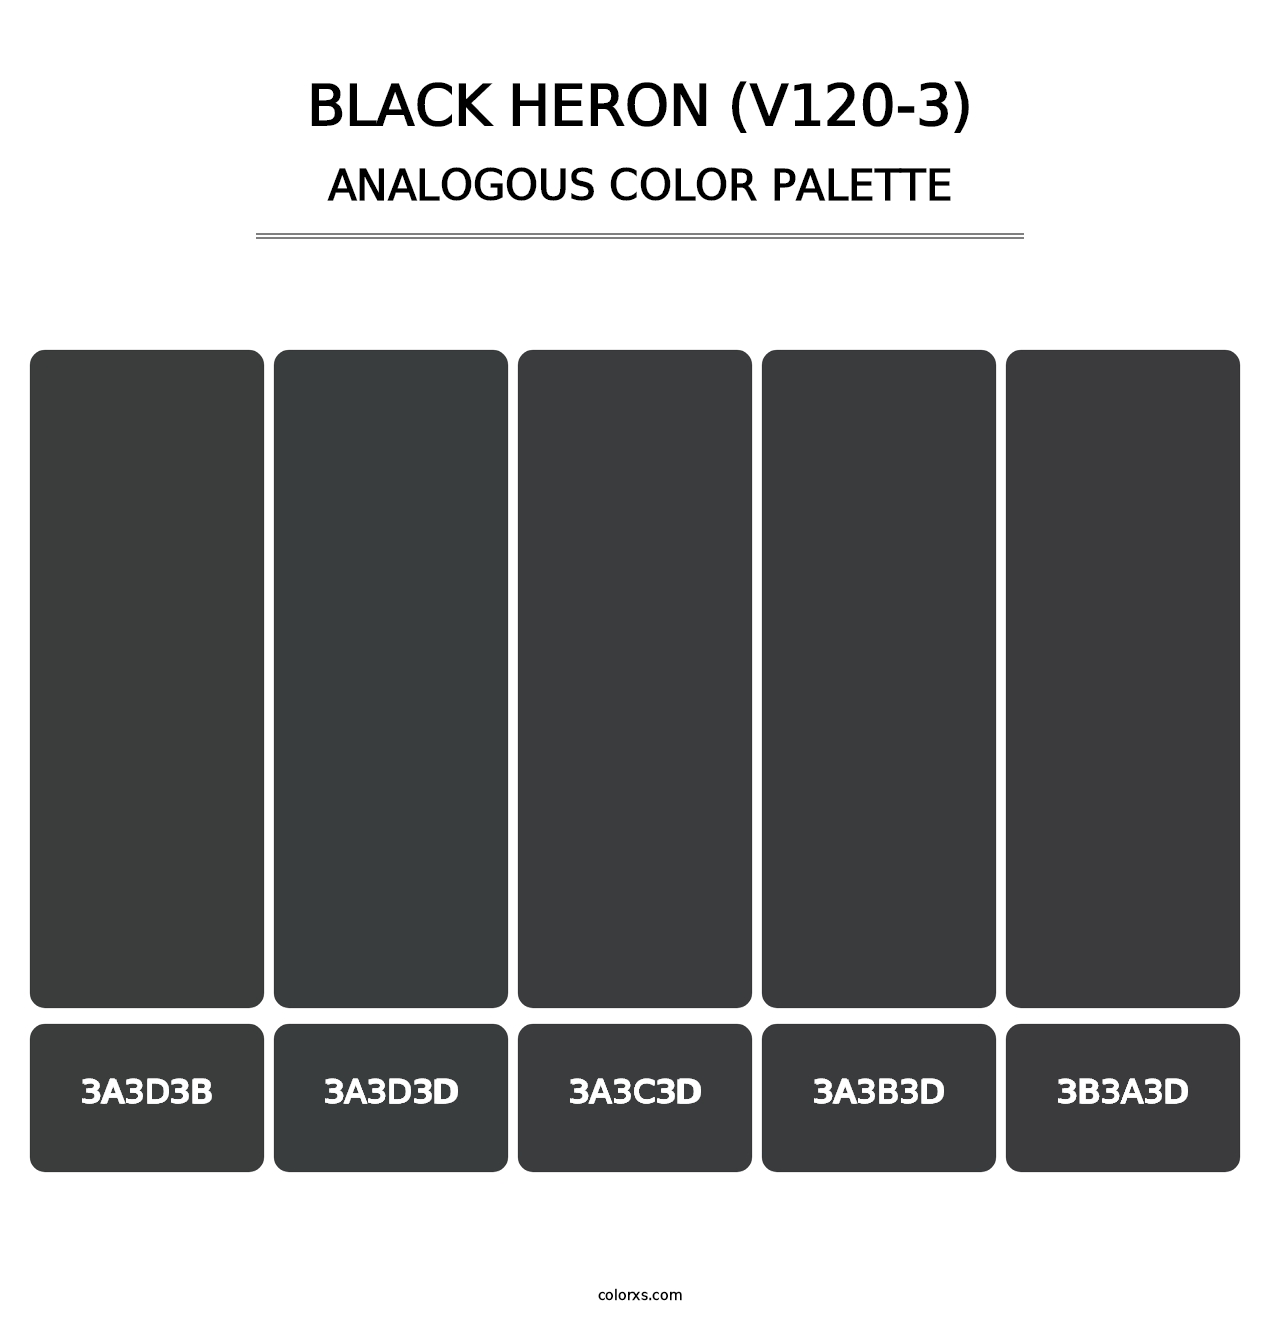 Black Heron (V120-3) - Analogous Color Palette